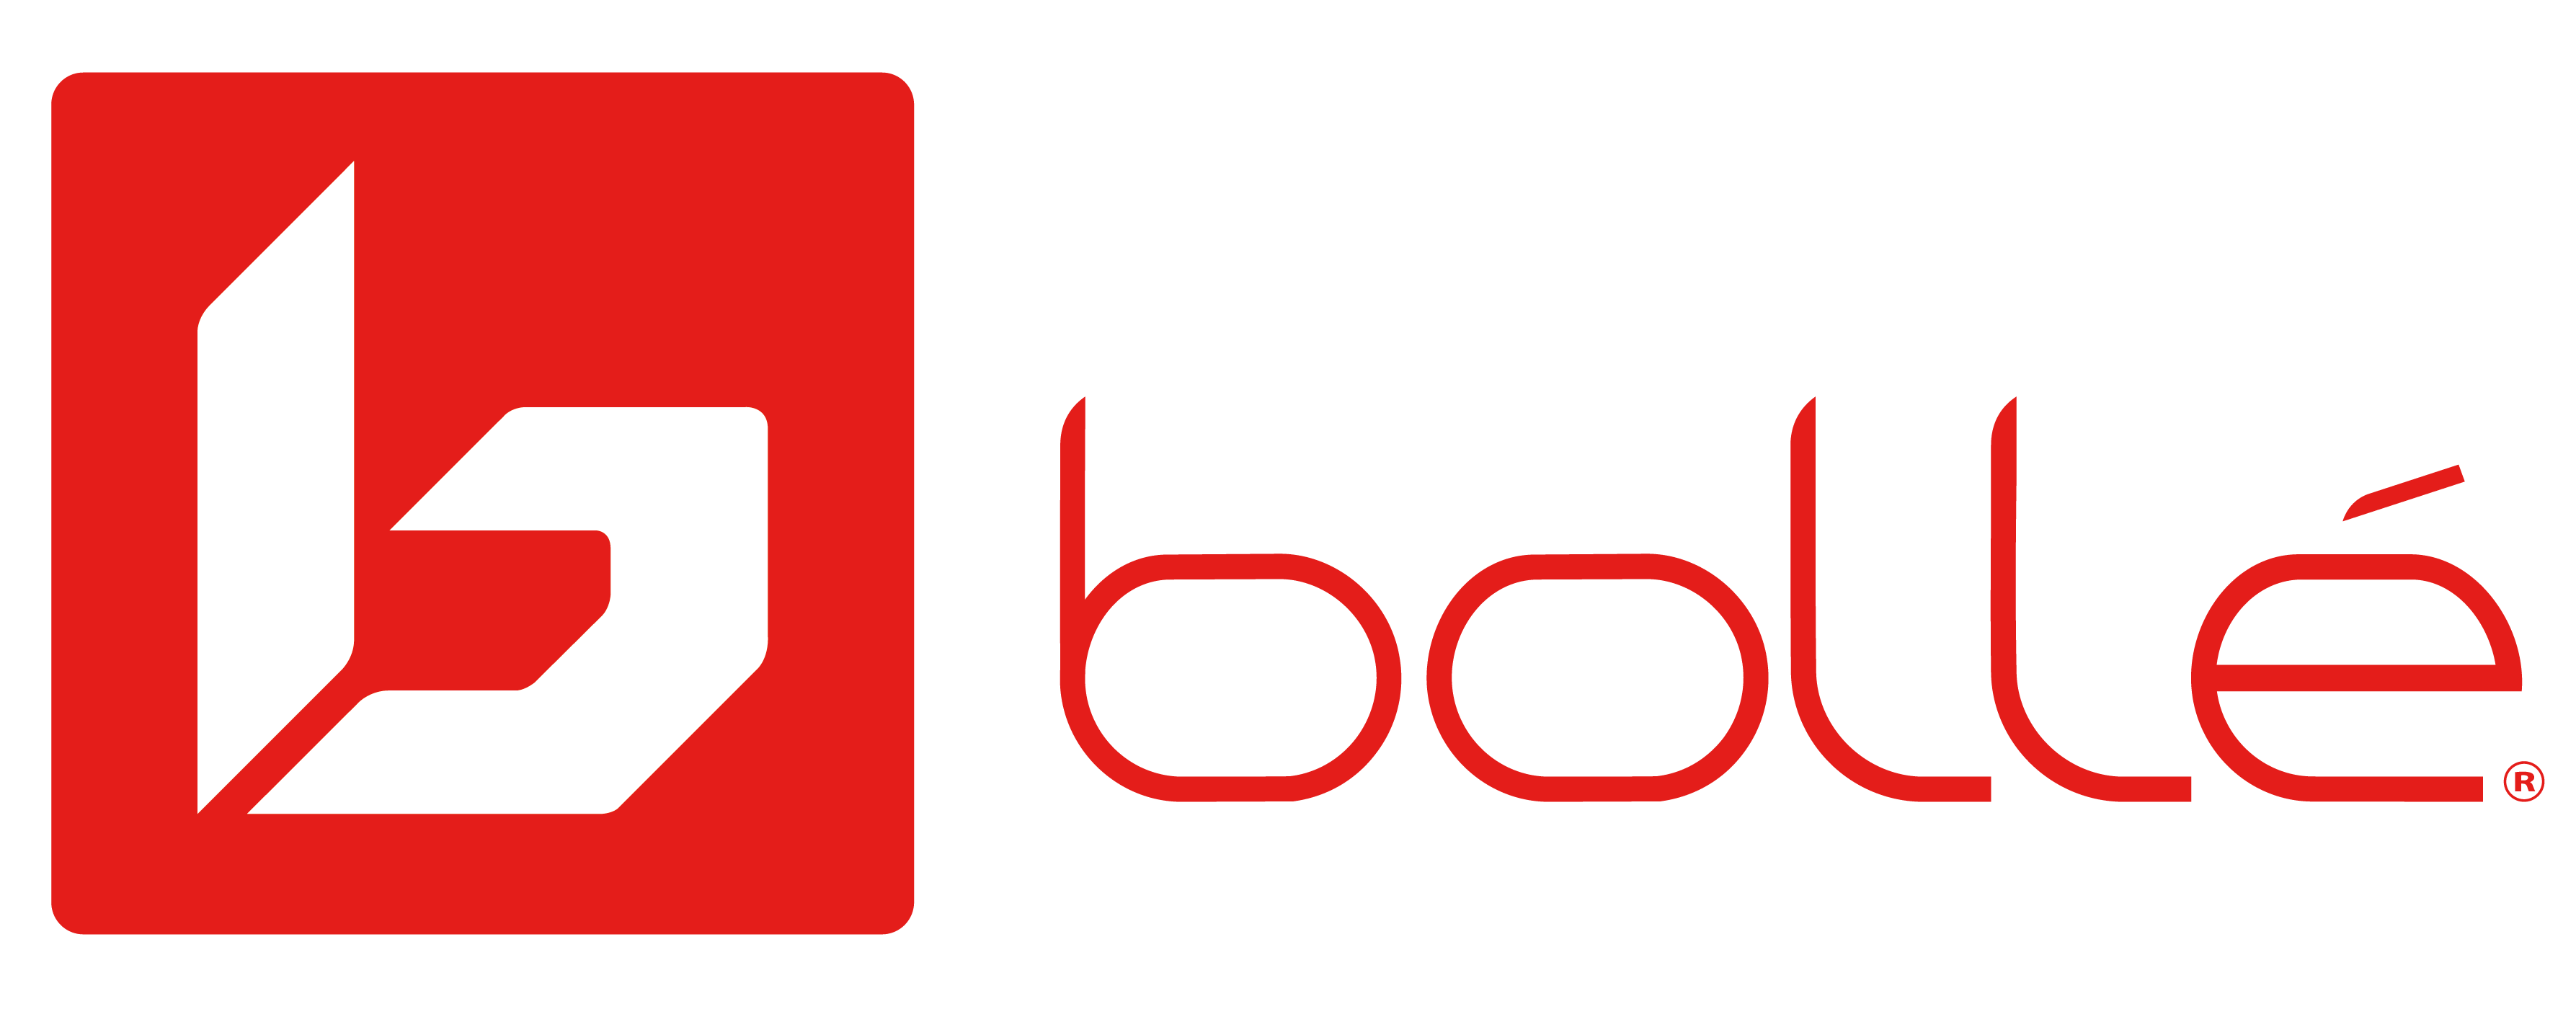 Bolle Logo - Logo HOME BRANDS NEWS PRESS KIT ACTION PHOTOS FAQ ...